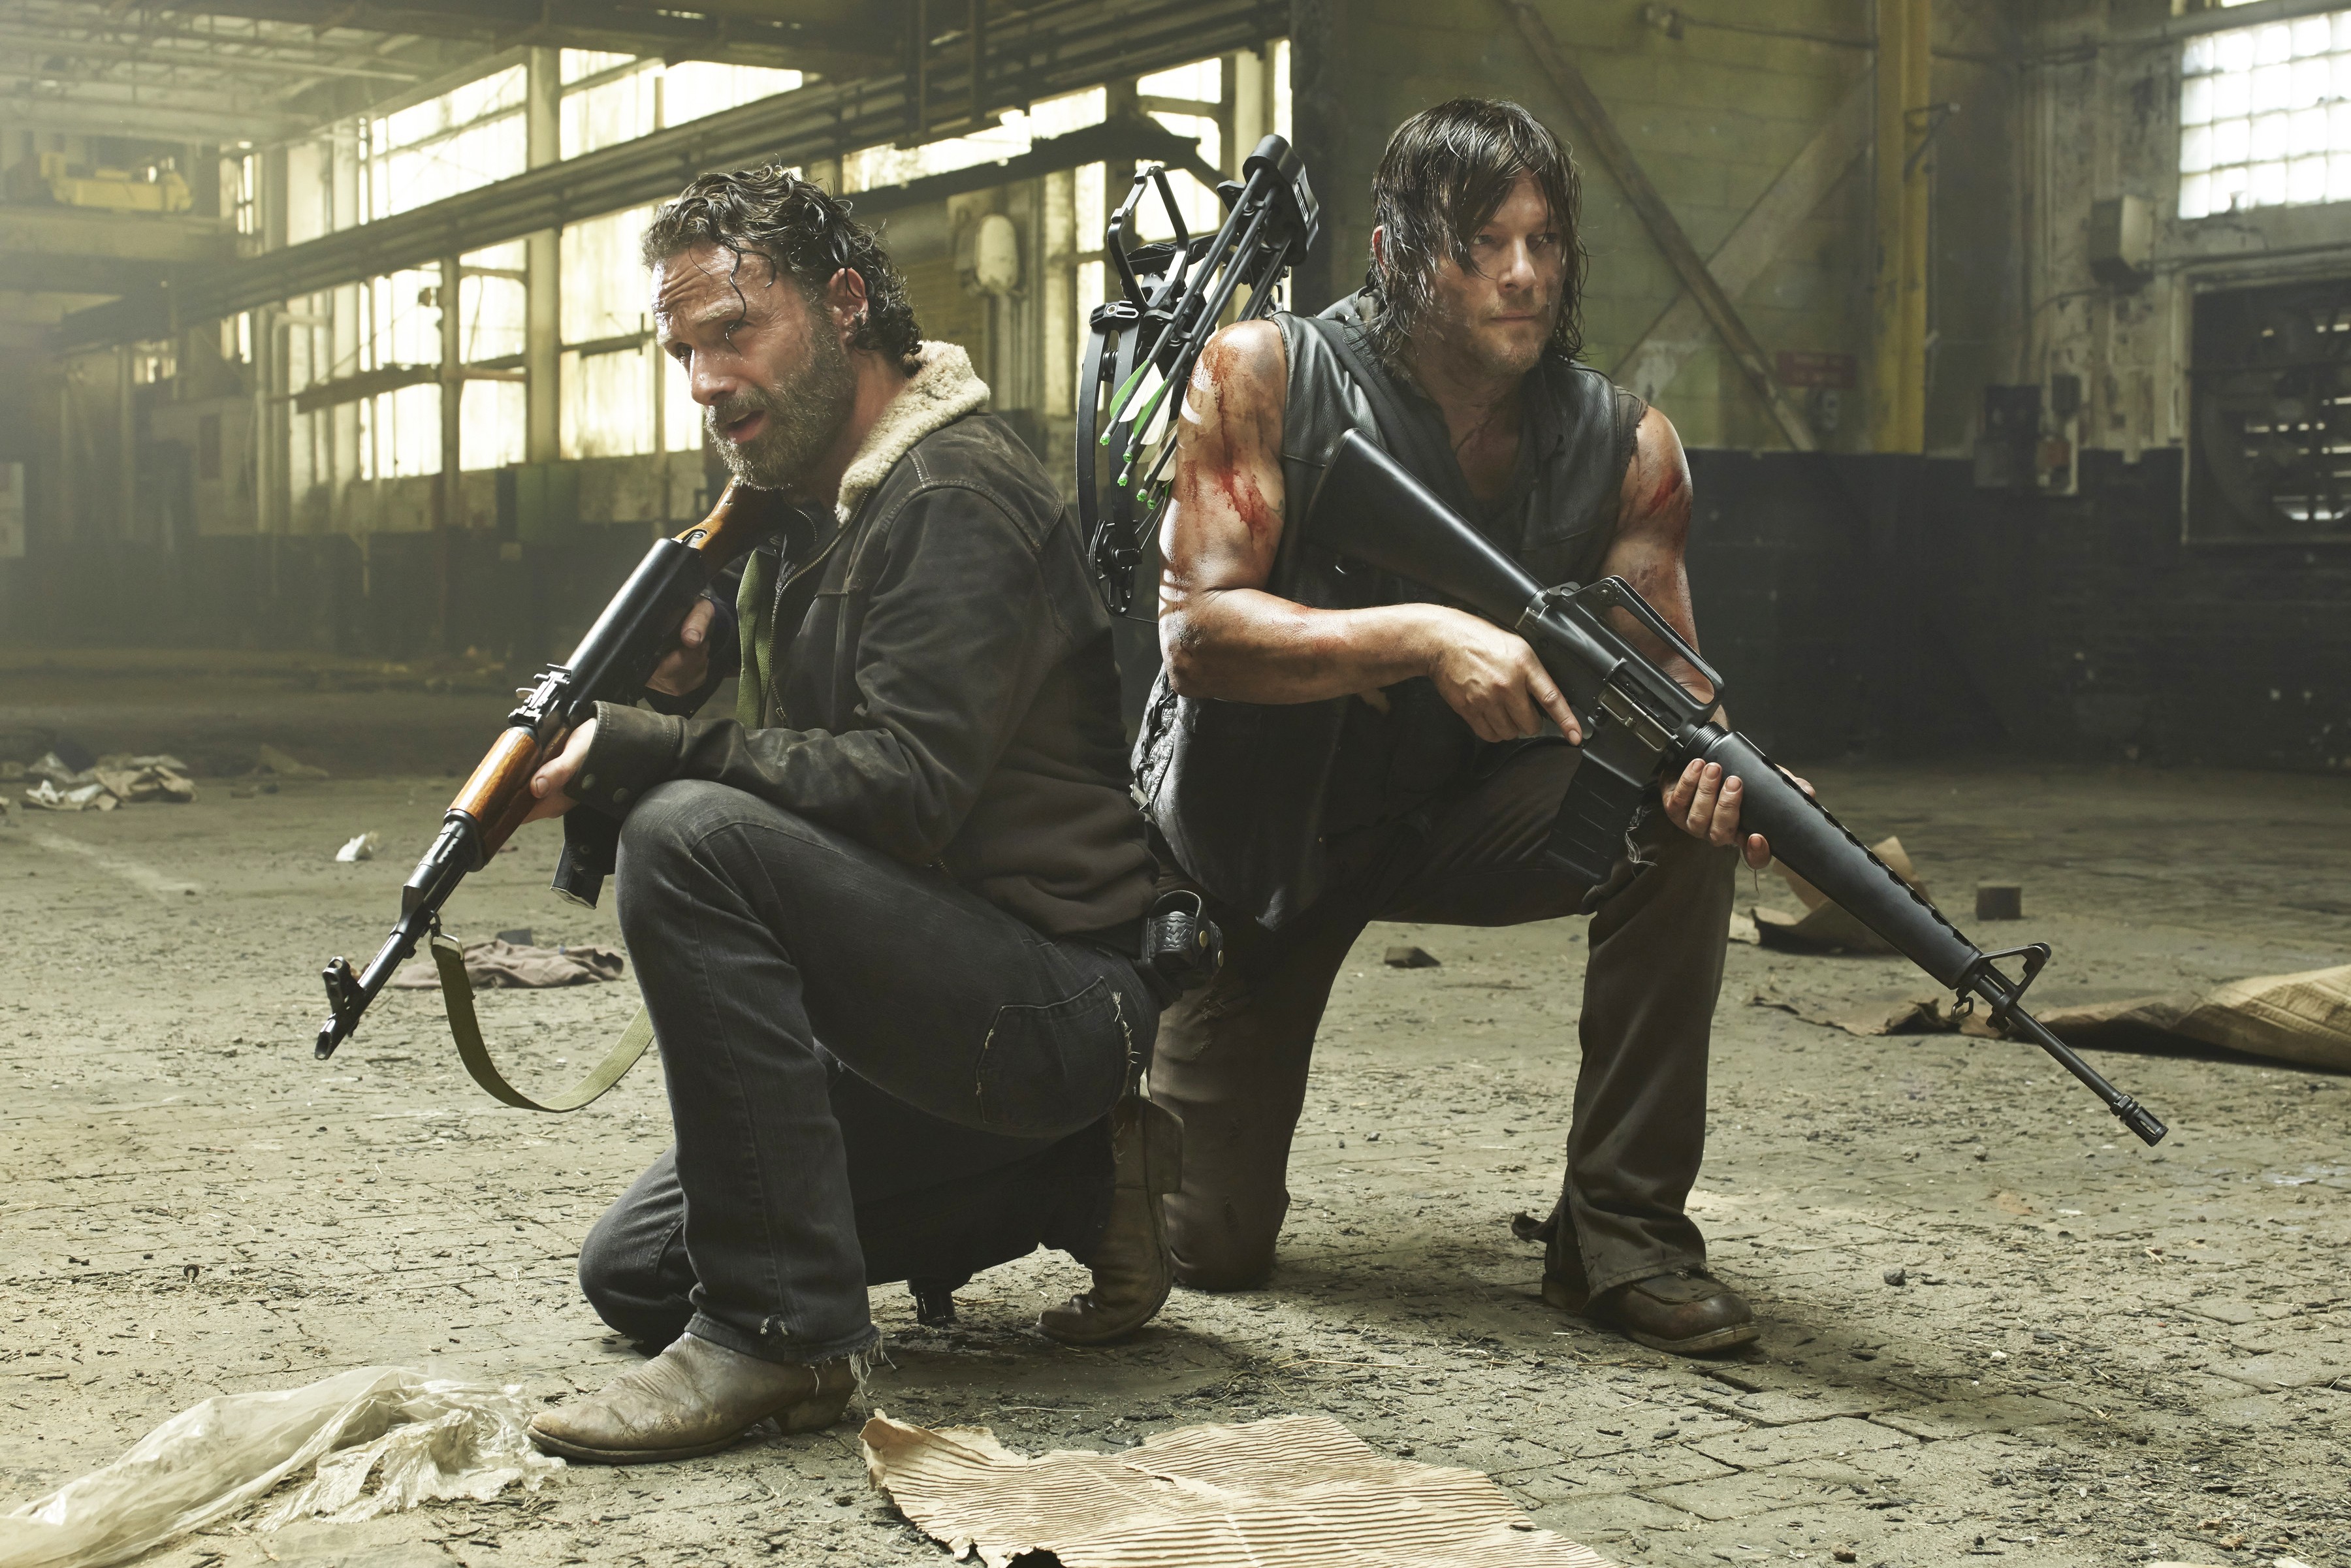 People 3600x2401 The Walking Dead Rick Grimes Daryl Dixon TV series actor machine gun weapon film stills men